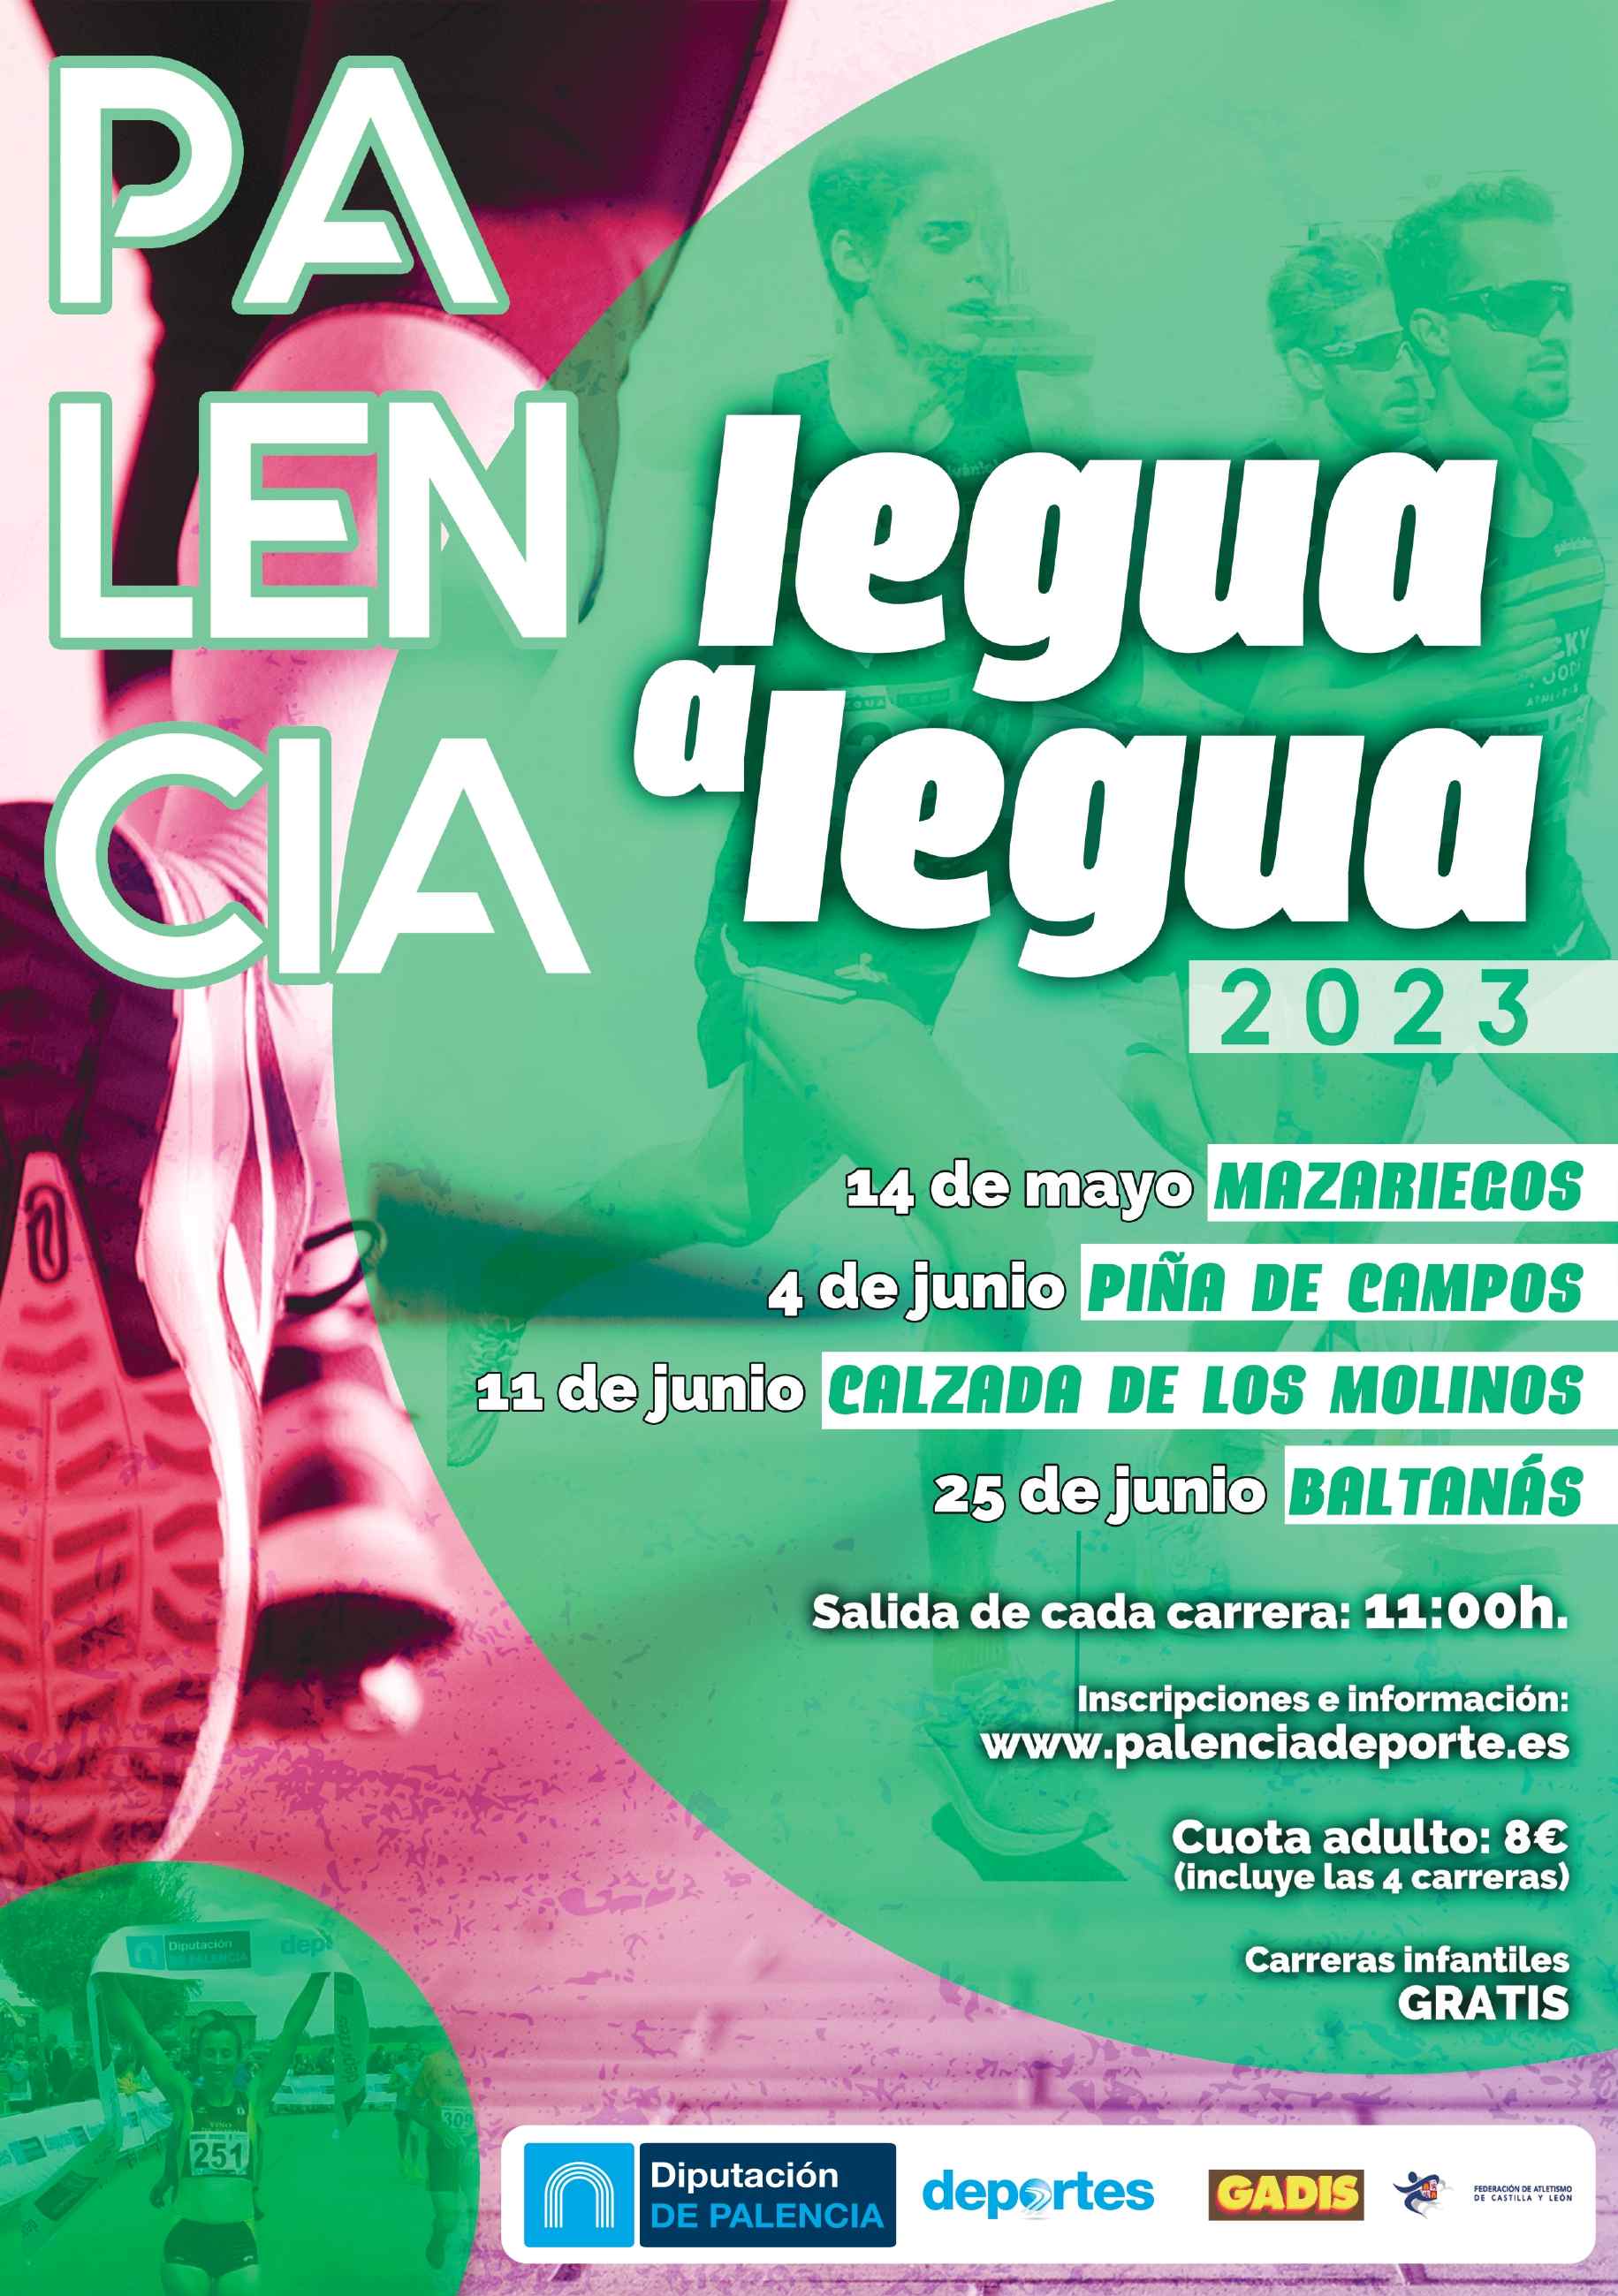 Event Poster BALTANÁS PALENCIA LEGUA A LEGUA 2023